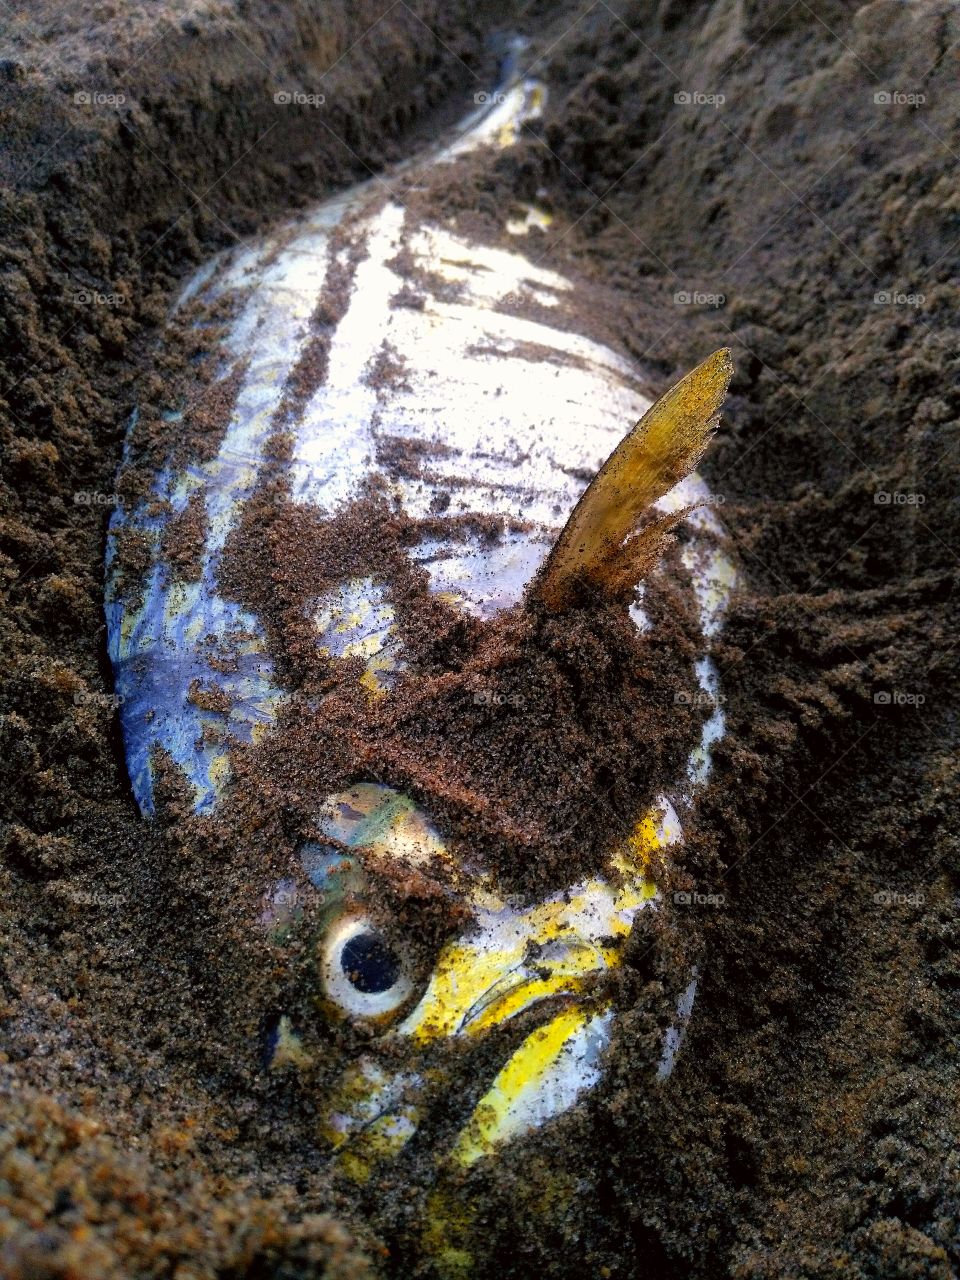 beautiful died fish